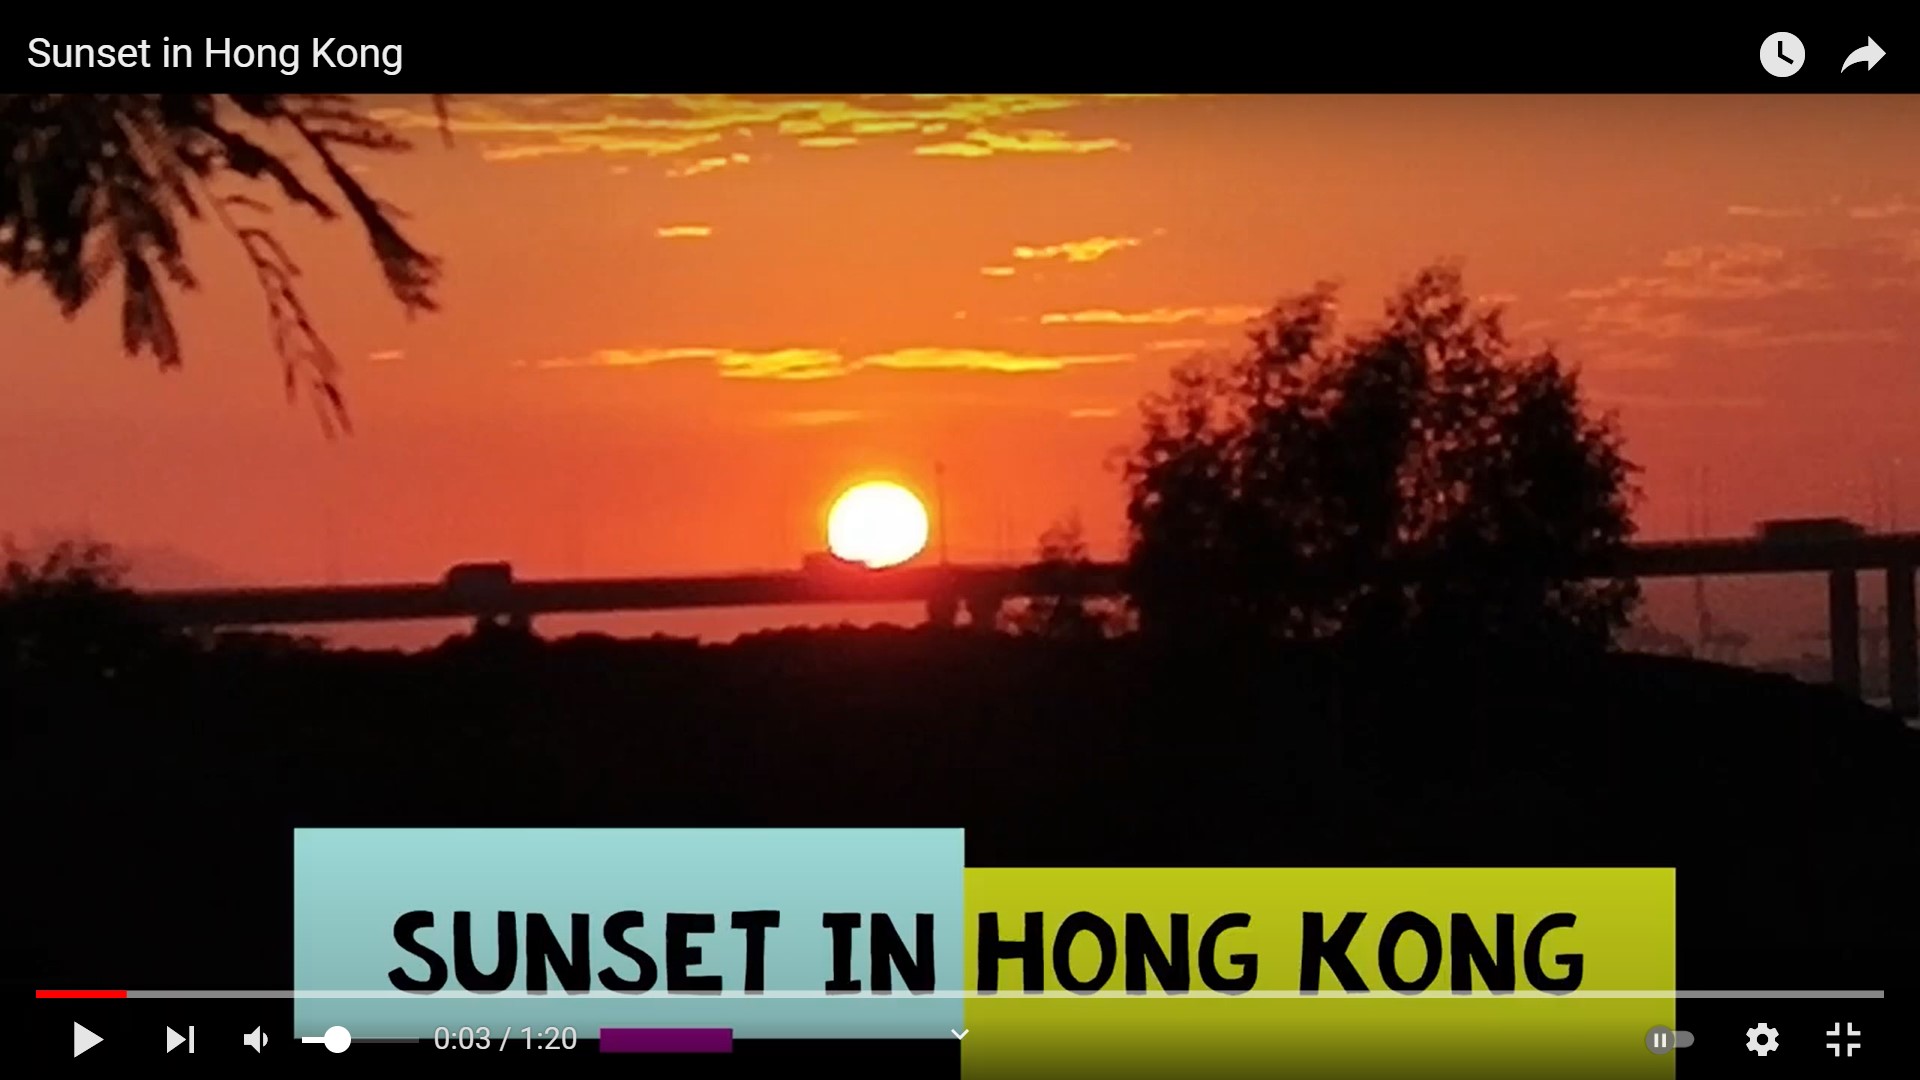 Frank’s “Sunset in Hong Kong” snapshots video